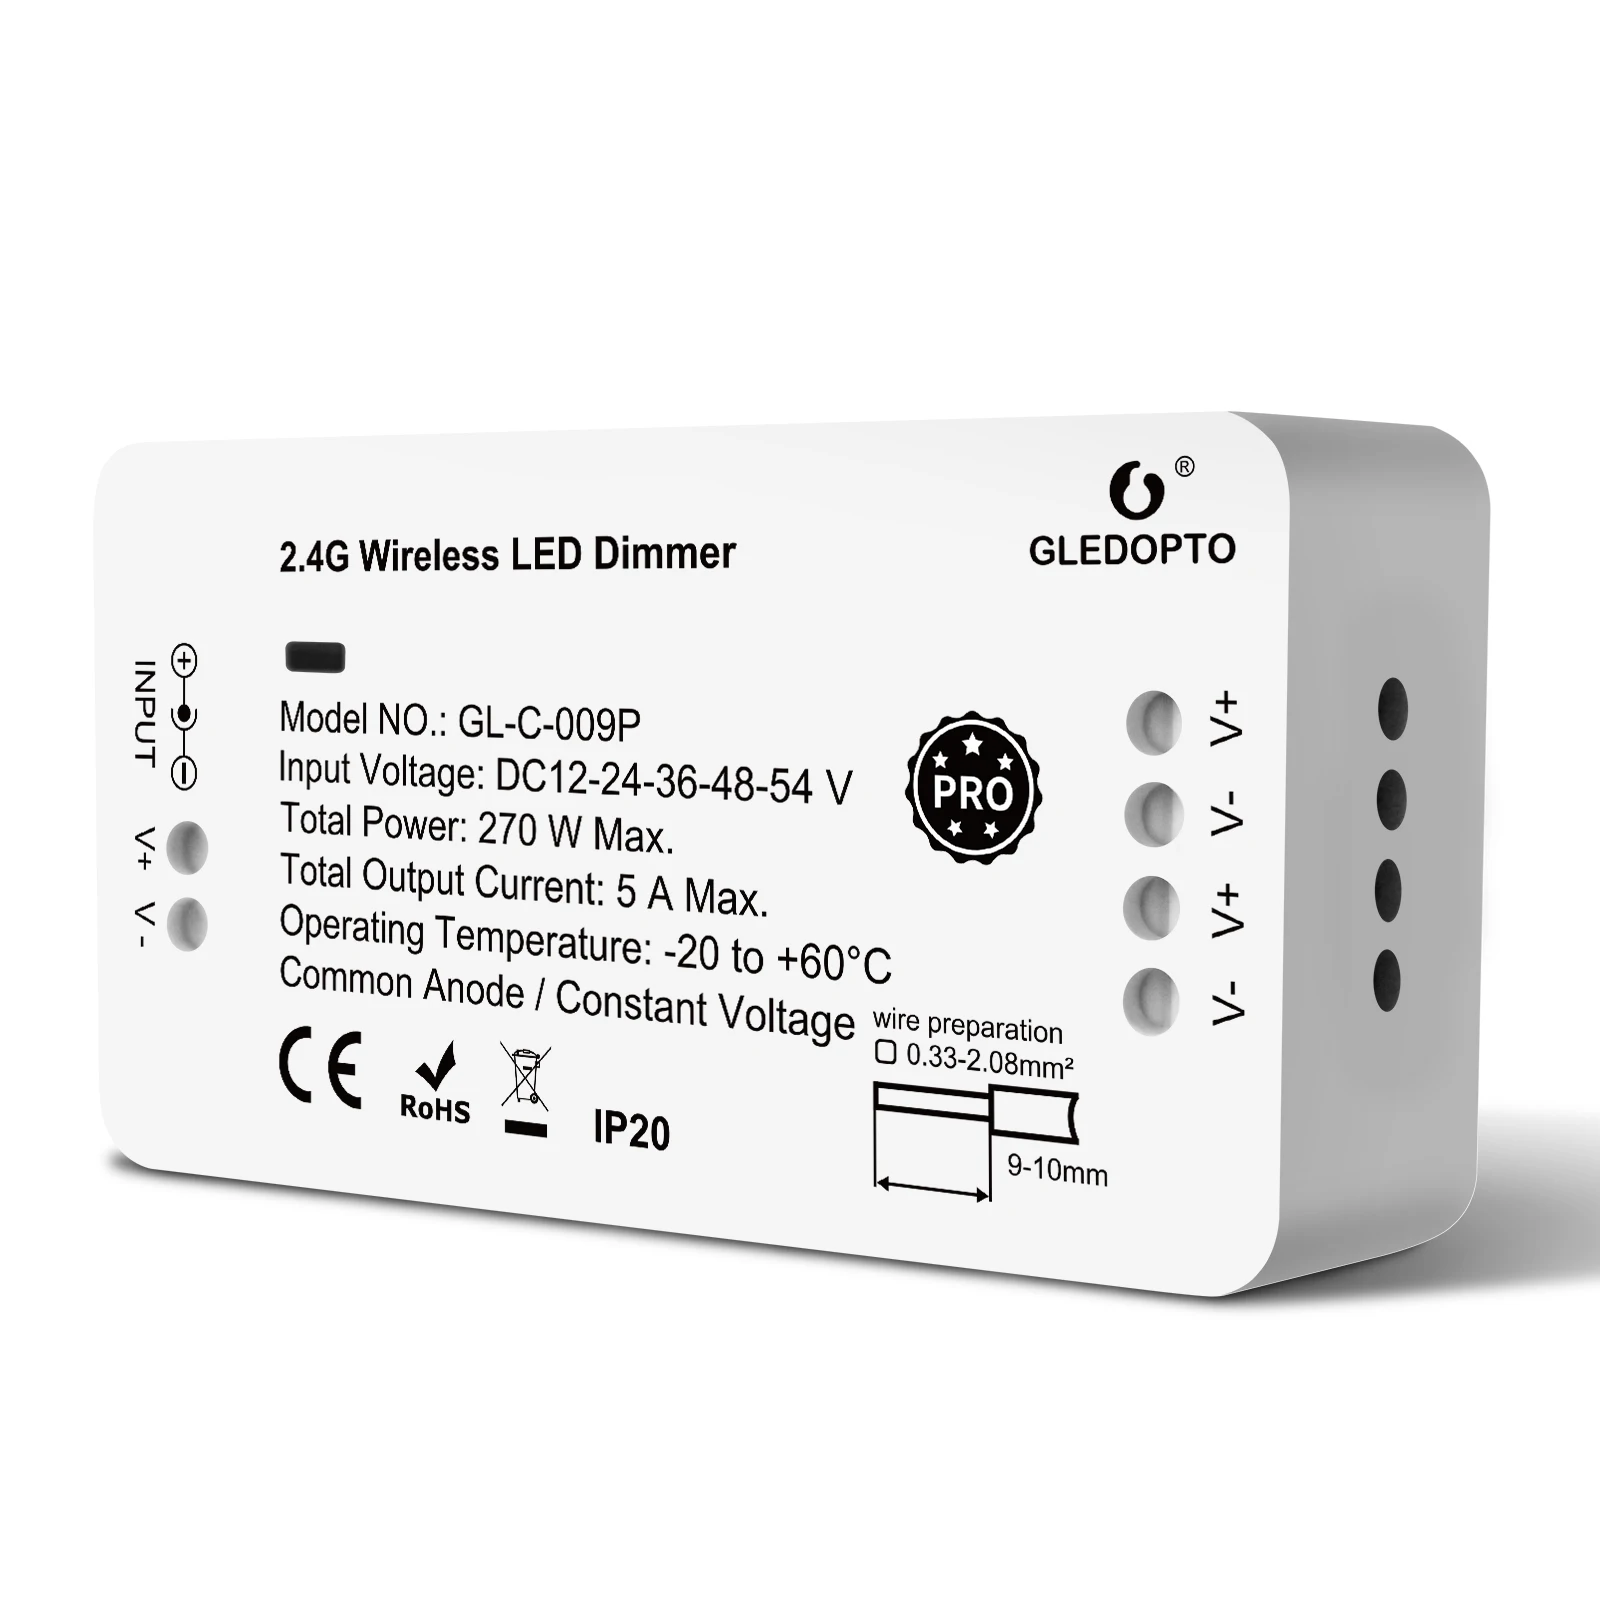 Gledopto Zigbee Pro Dimmer Led Controller With Reset Key - Buy Led Dimmer Led Controller 48v,Zigbee Remote Controller,Light Dimmer Remote Control System Product on Alibaba.com